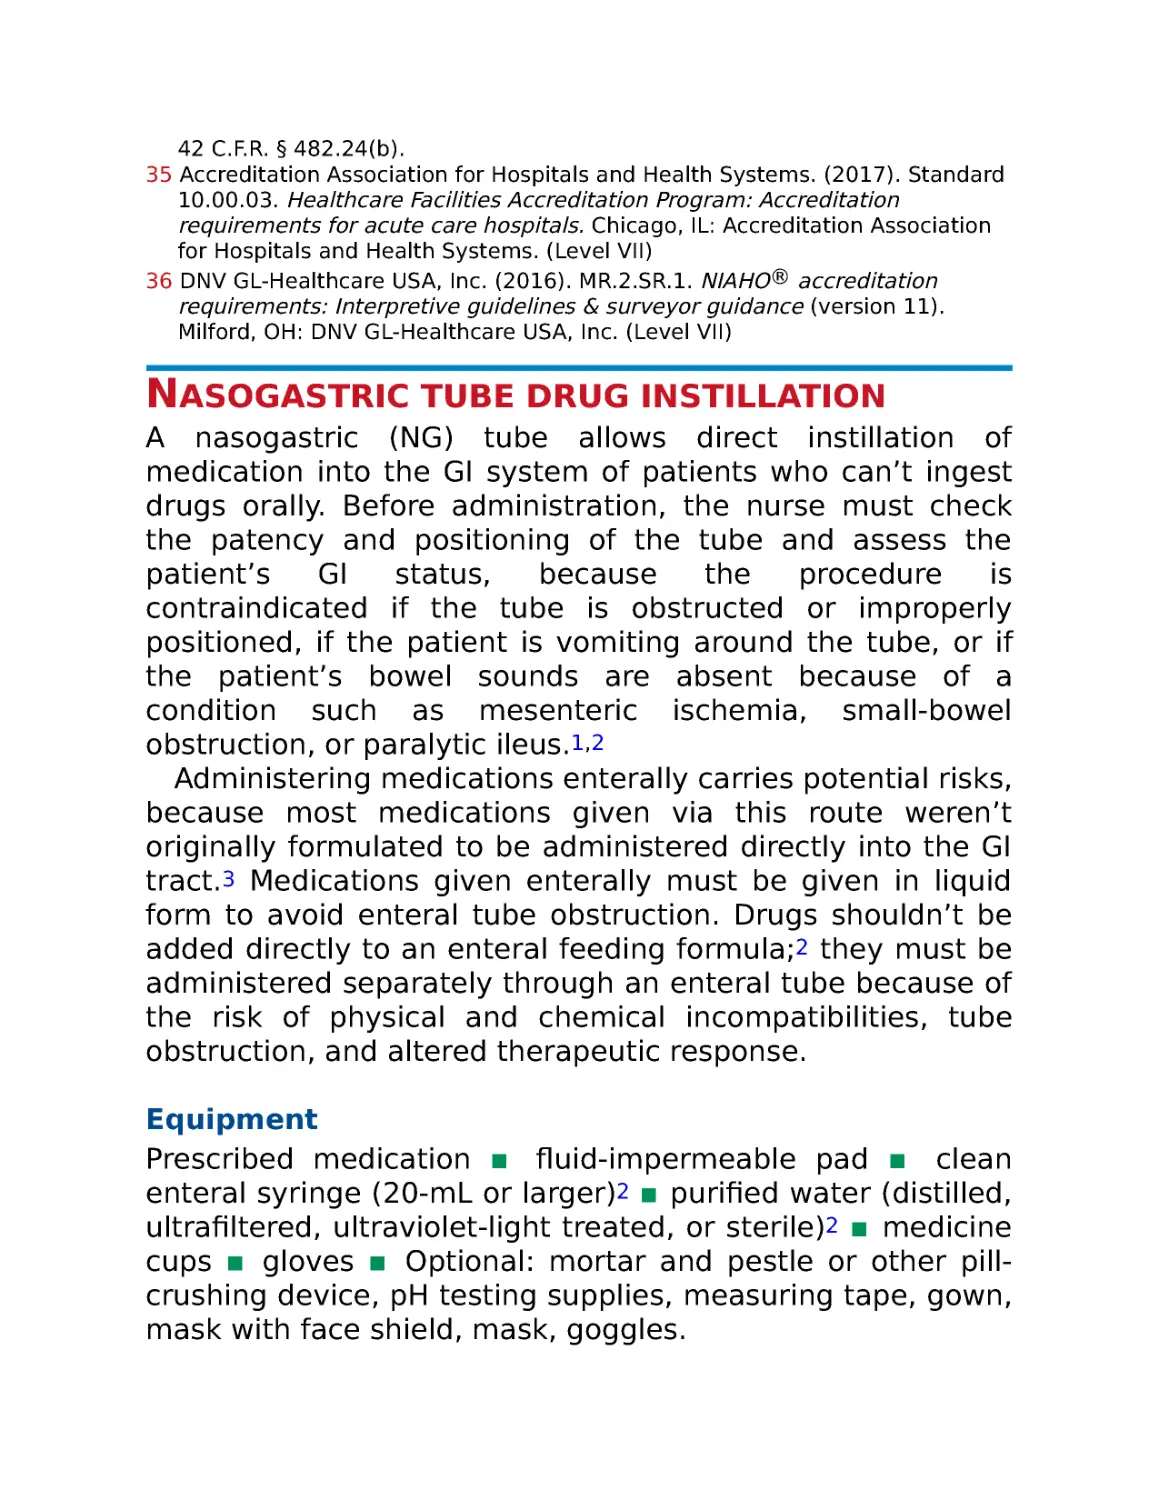 Nasogastric tube drug instillation